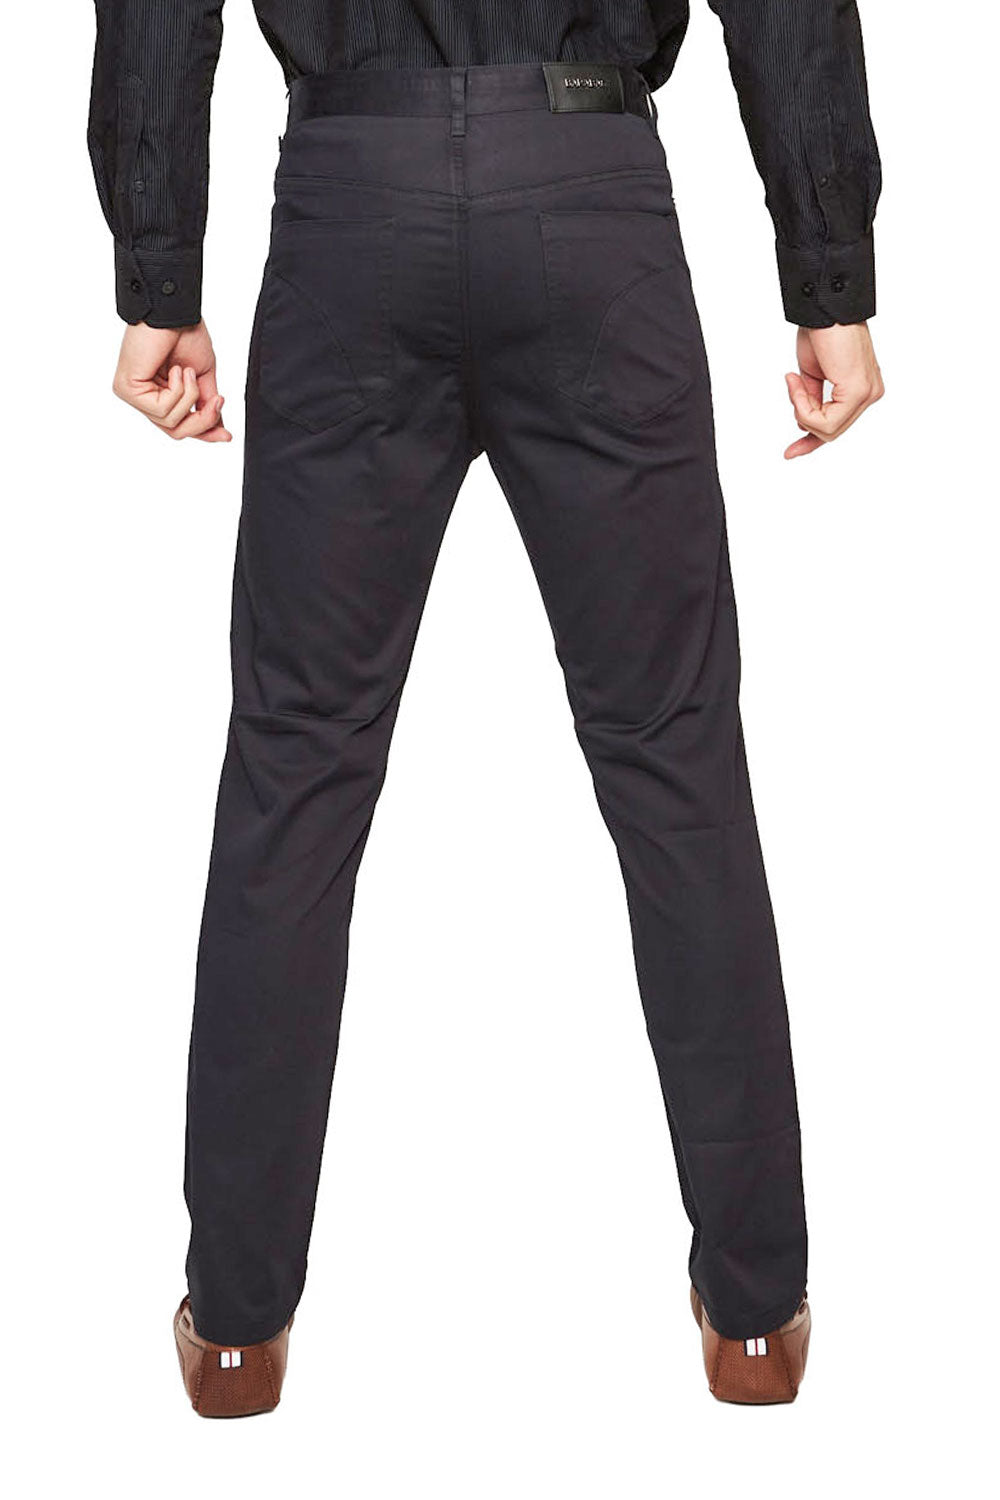 Barabas Men's Solid Color Front Button Fasten Classic Fit Pants B2073  NAVY